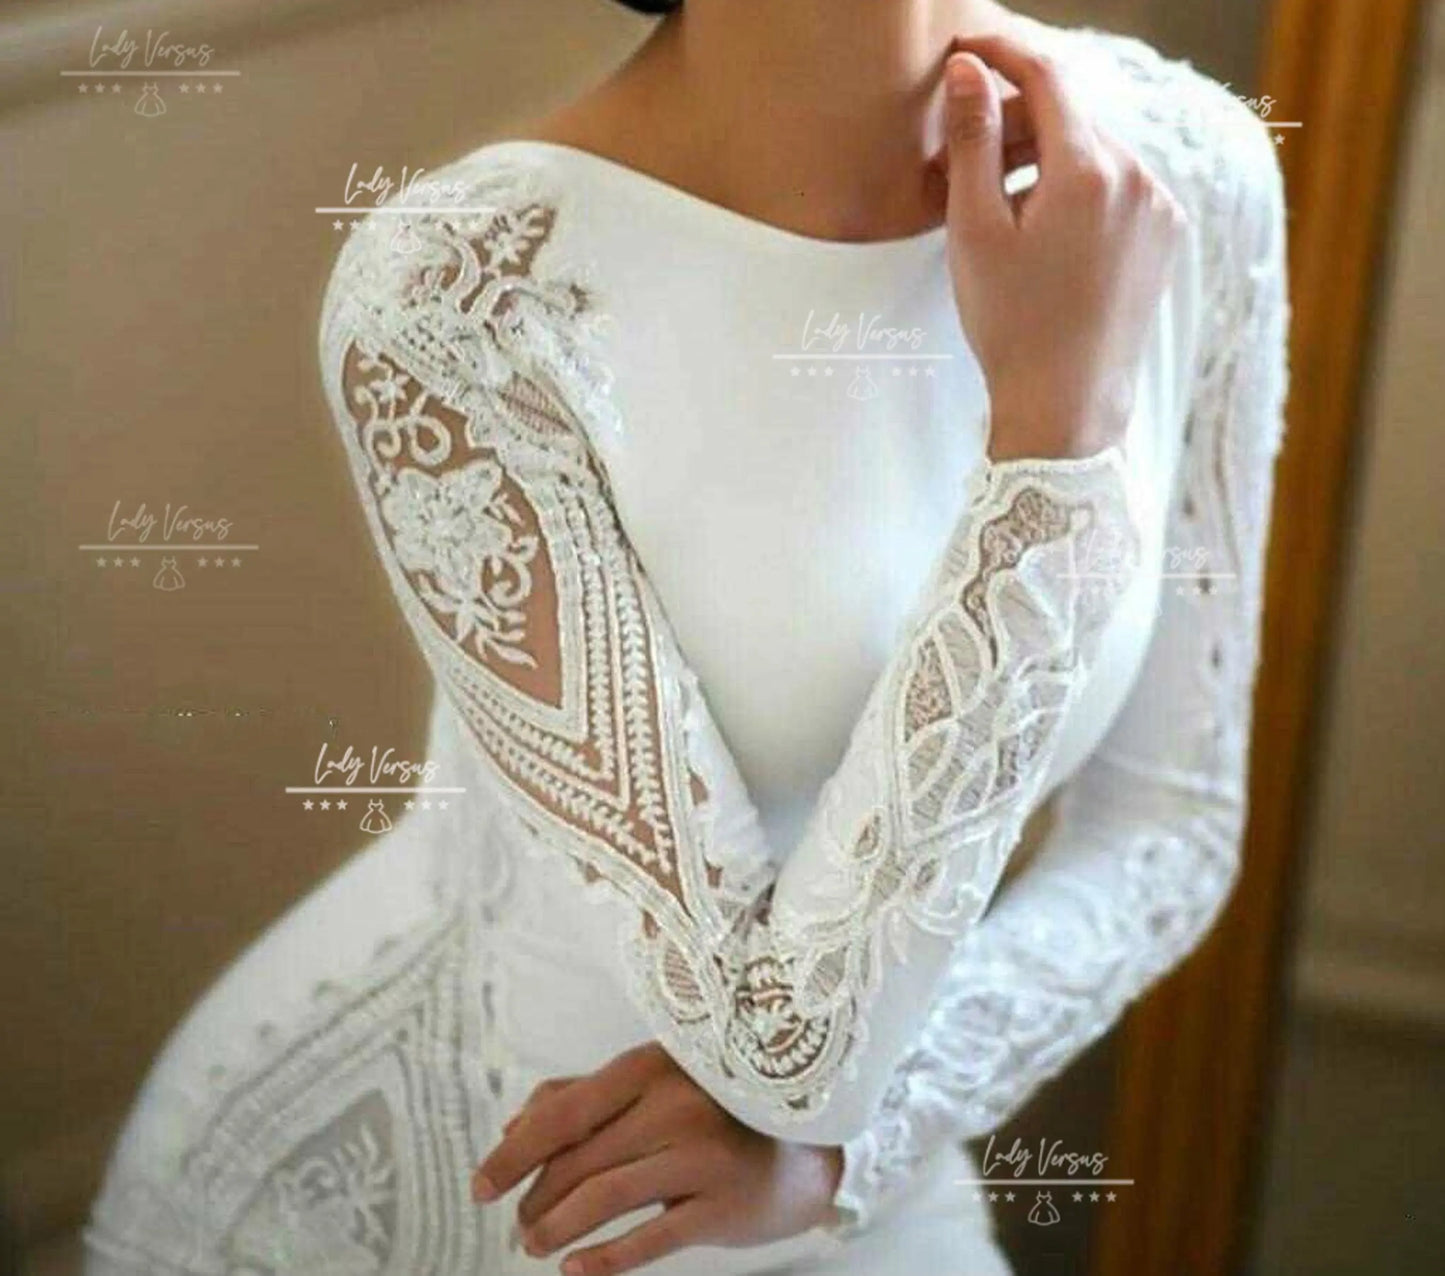 Elegant Satin with embedded lace Wedding  Dress /Beach wedding dress /bridal gown/ bohemian Long train dress/  lace dress long sleeves Lady Versus